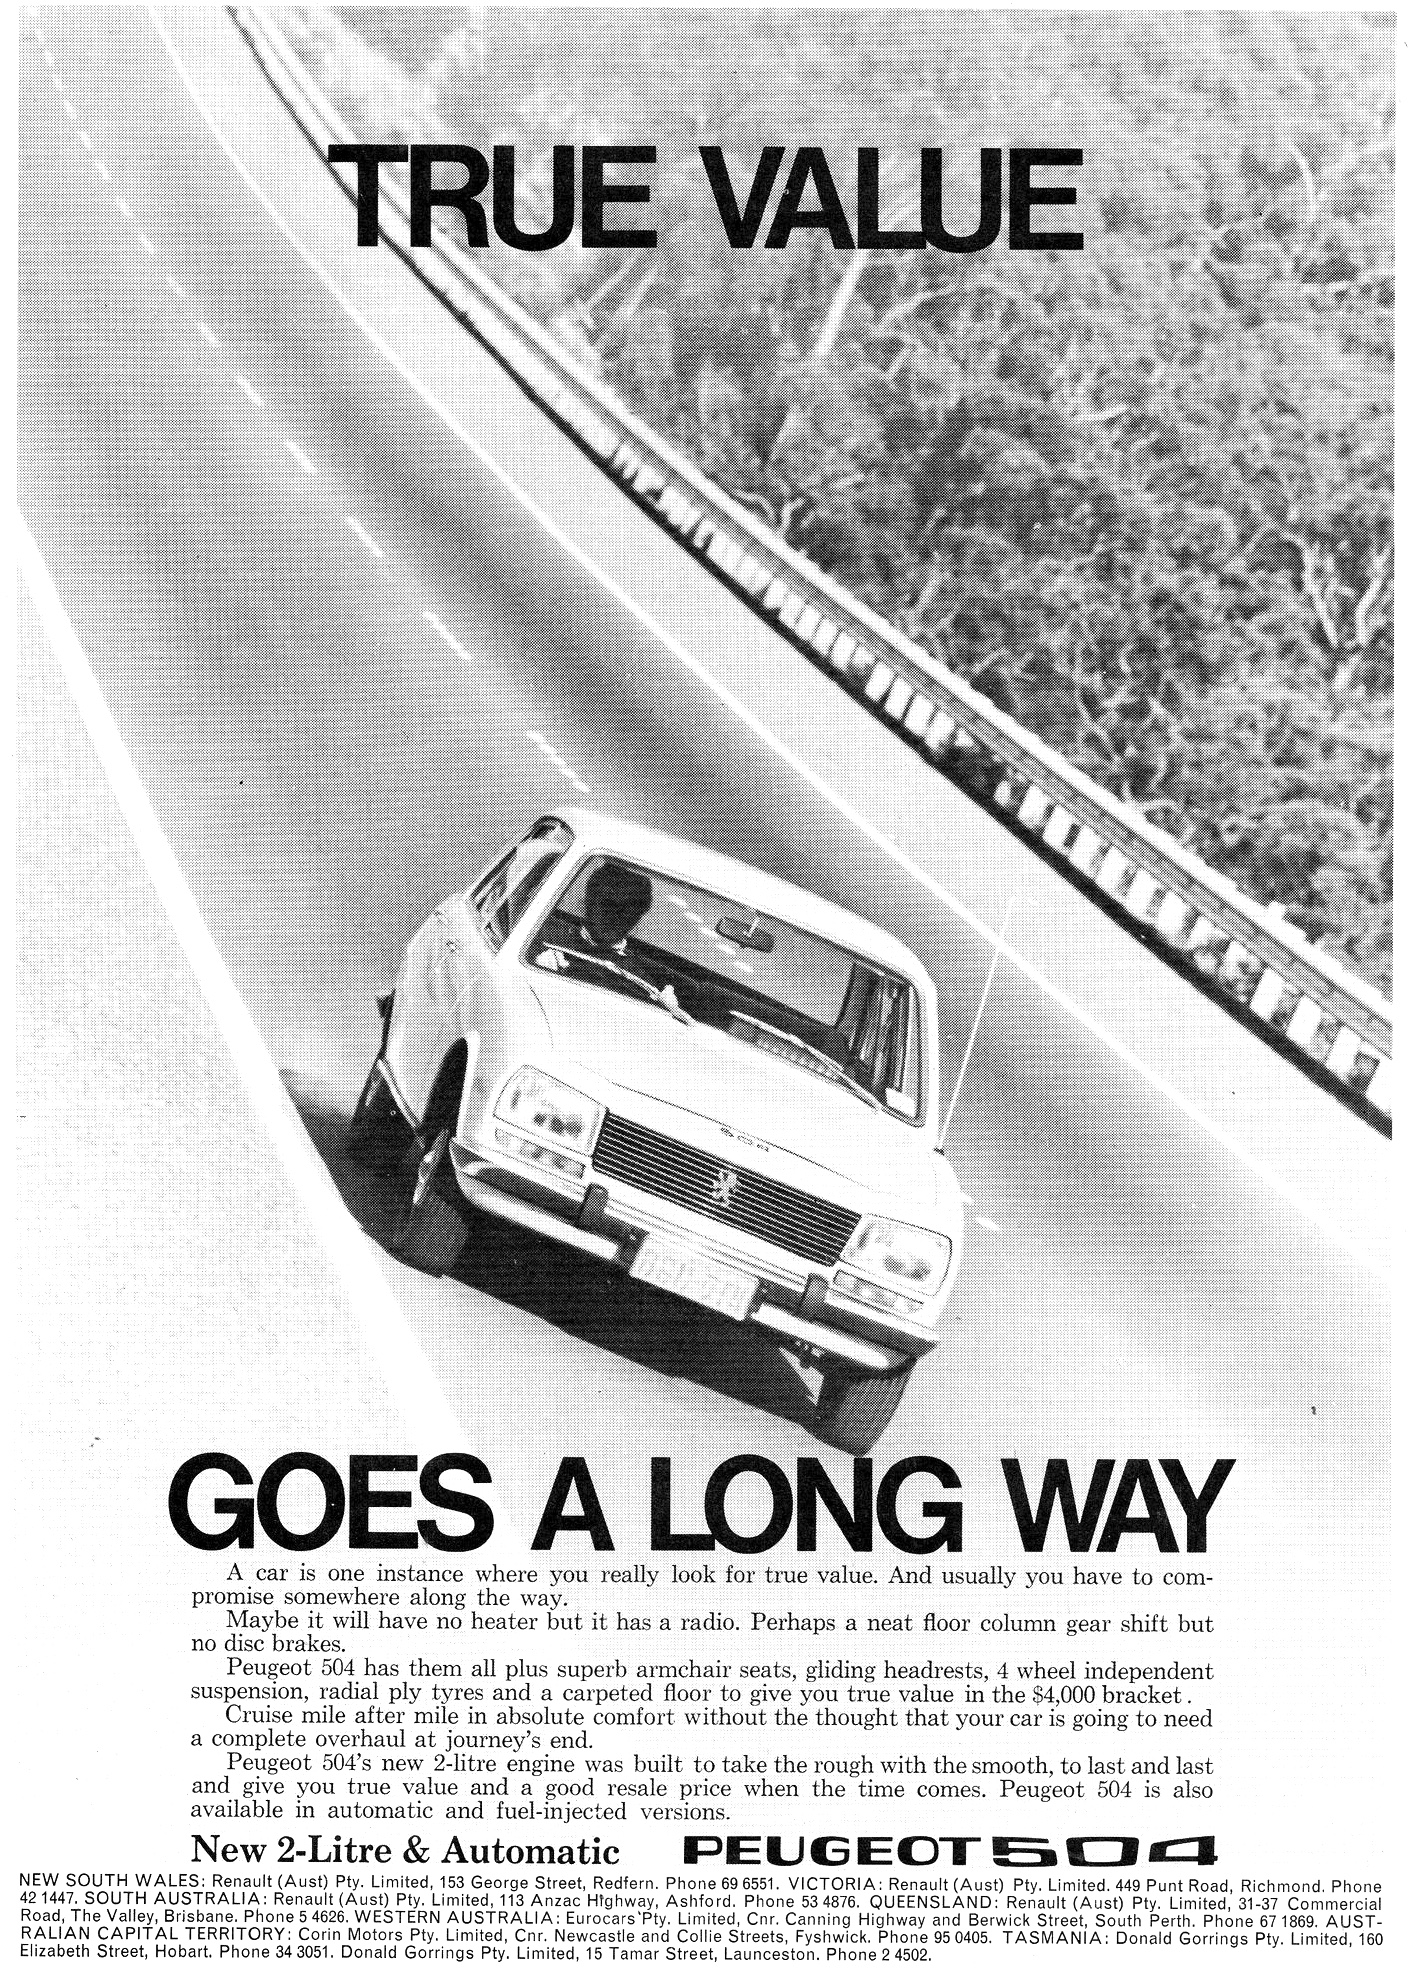 1971 Peugeot 504 True Value Goes A Long Way